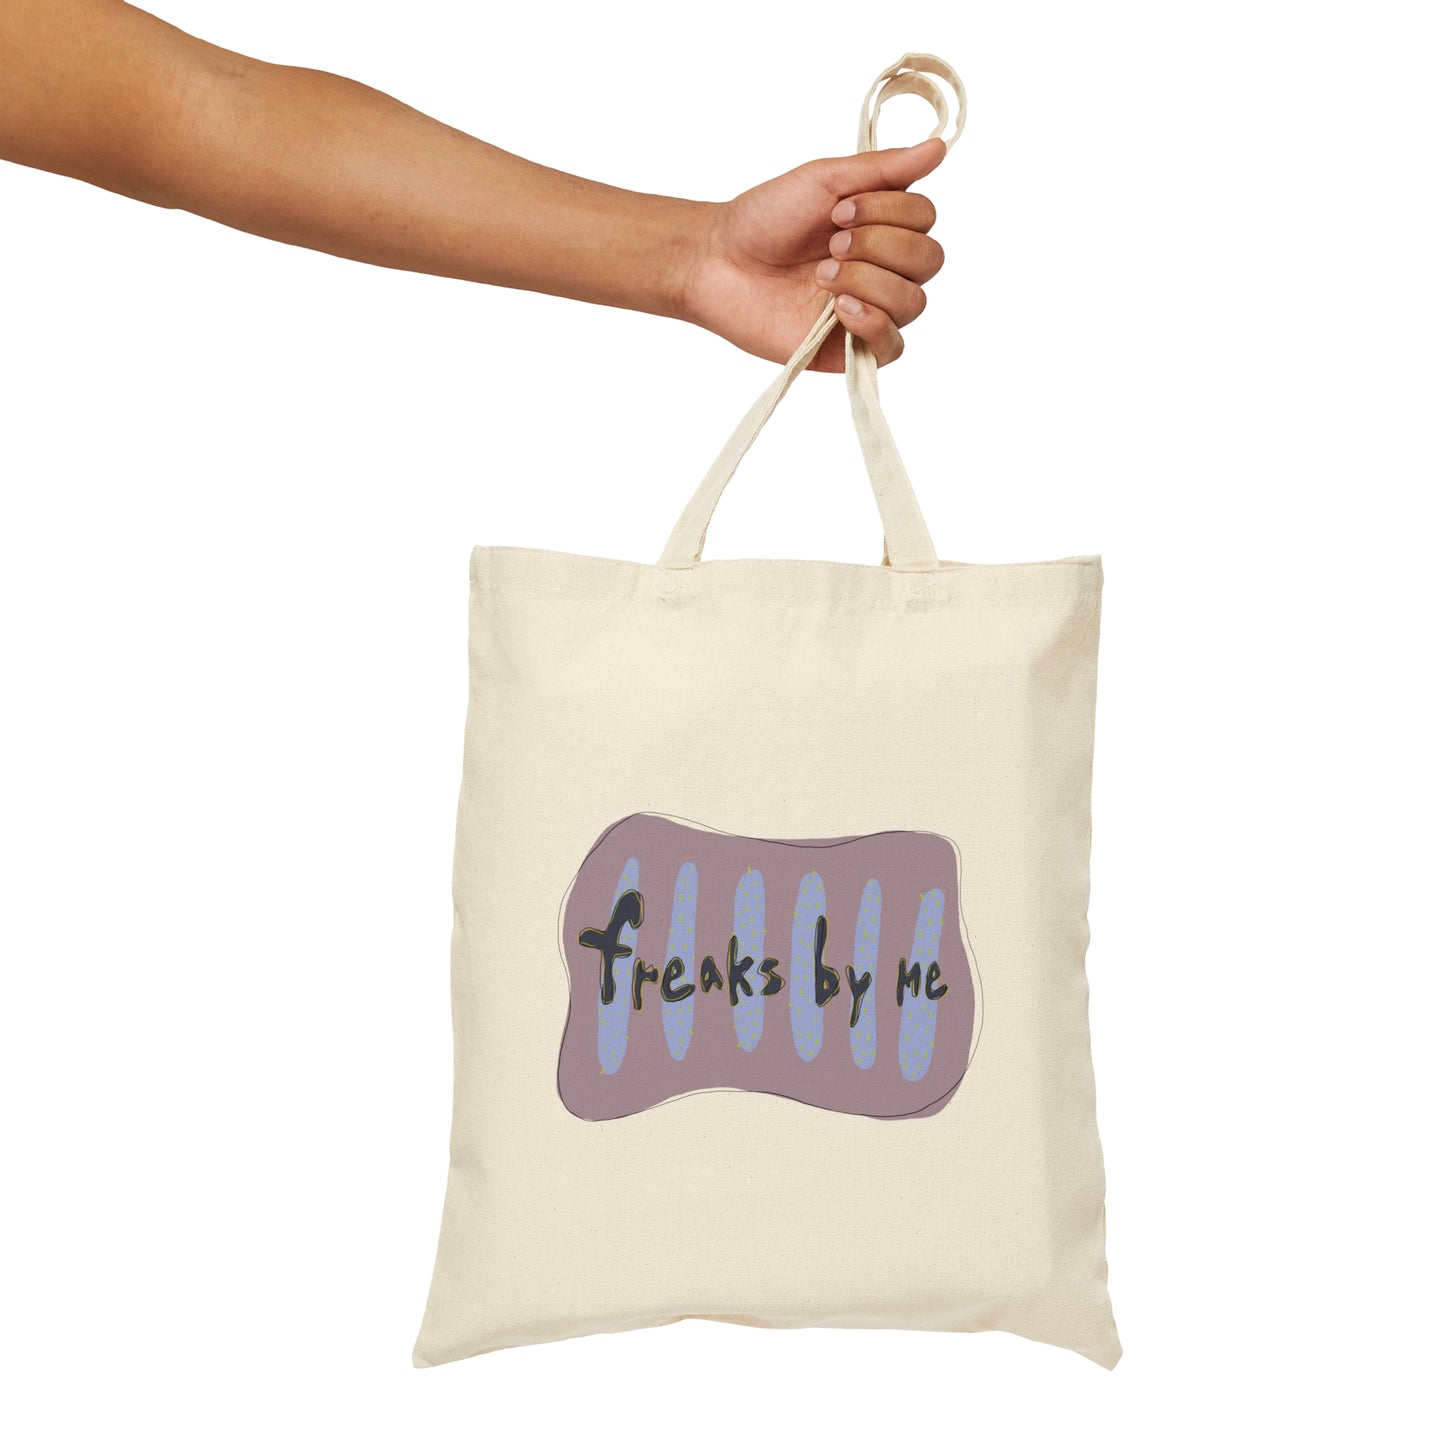 why not freak - tote bag